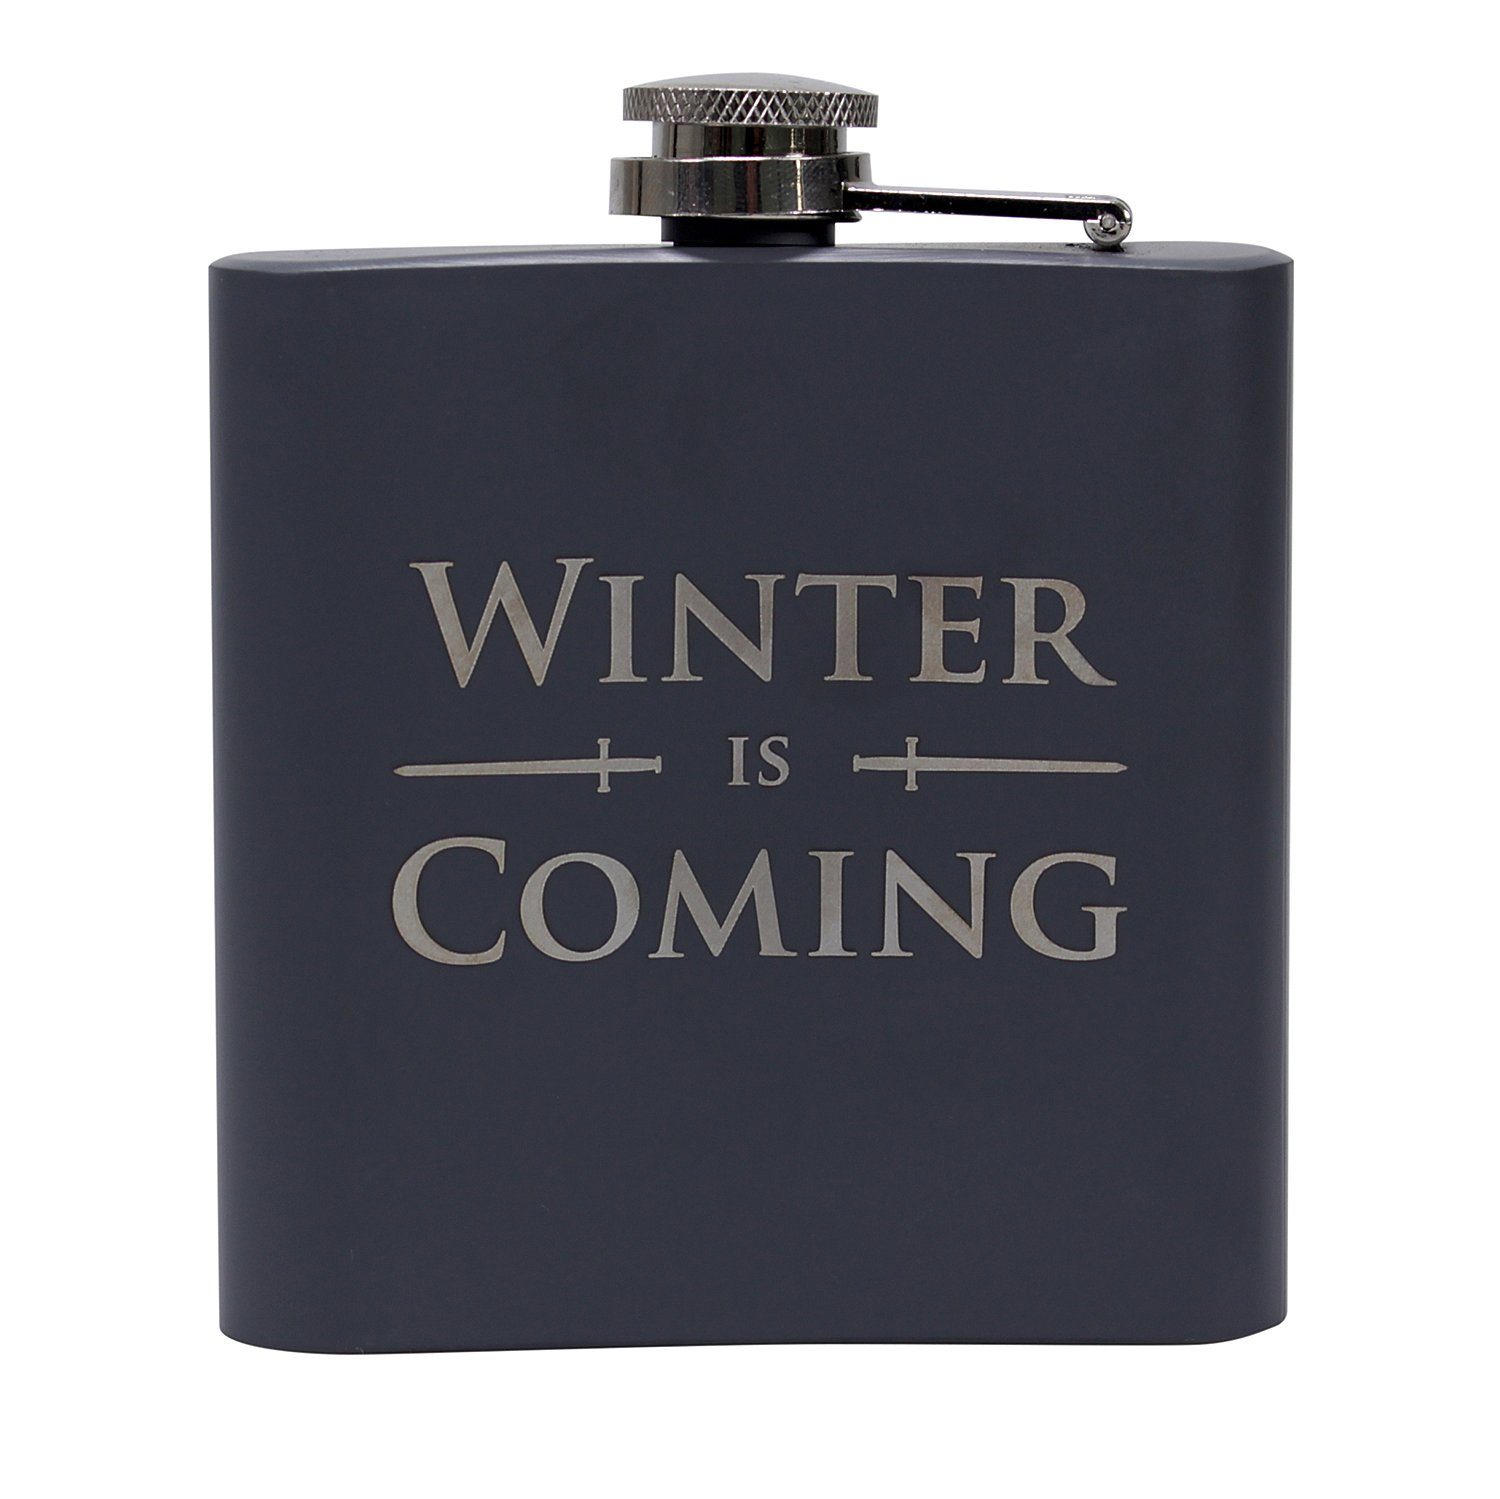 Coming Flachmann is Game Thrones HMB Winter Tasse of